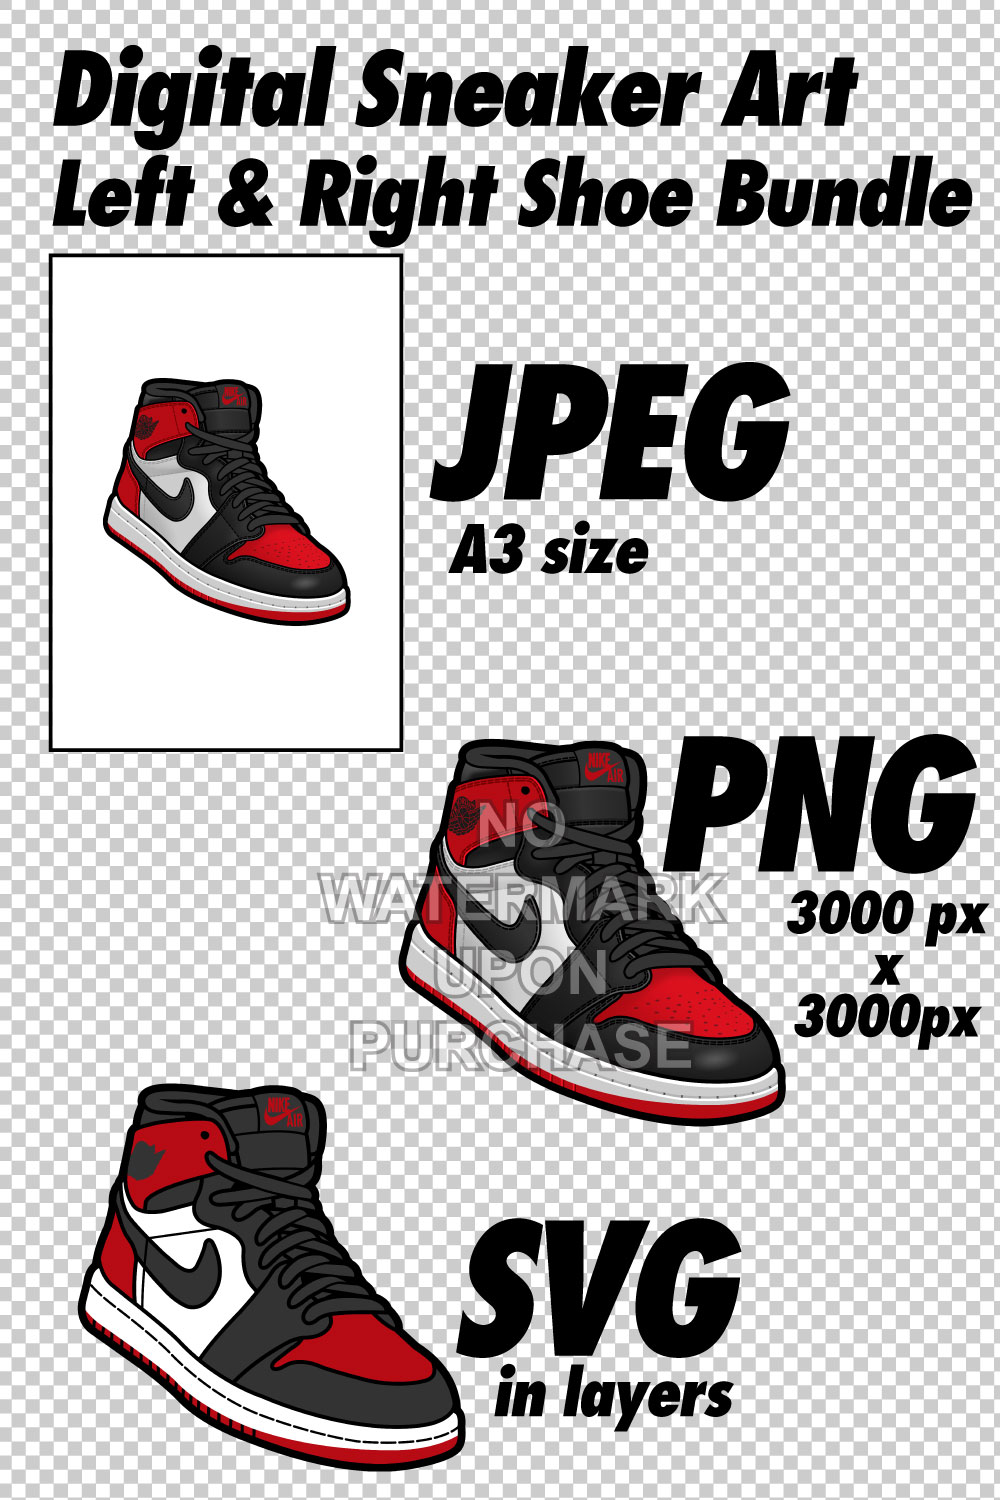 Air Jordan 1 Red Toe JPEG PNG SVG Sneaker Art Right & Left shoe bundle with lace swap Digital Download pinterest preview image.